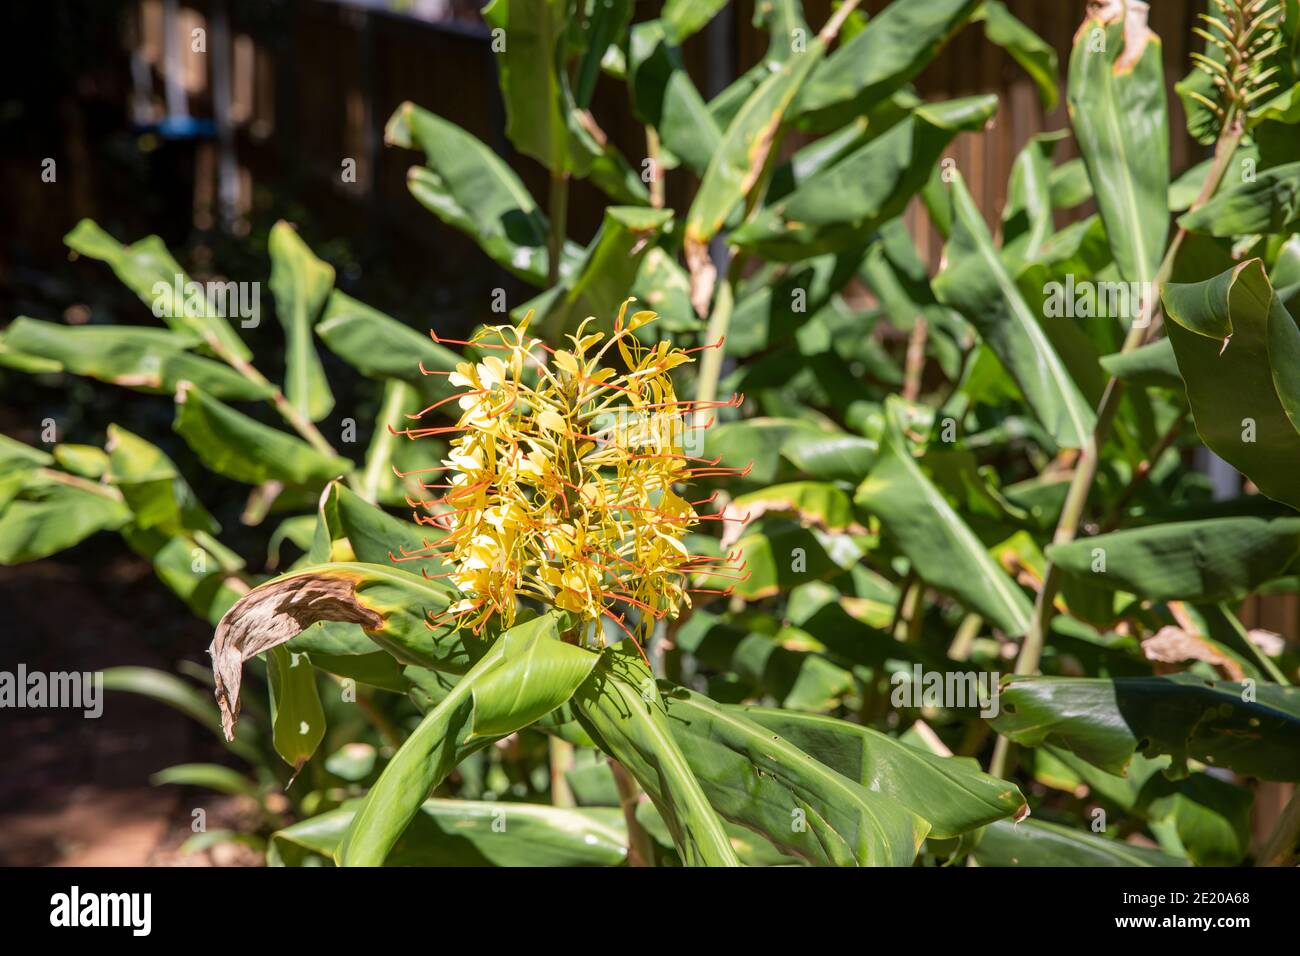 Kahili Ginger plant Hedychium gardnerianum in Australian garden with yellow flowers, summers day,Sydney,Australia Stock Photo